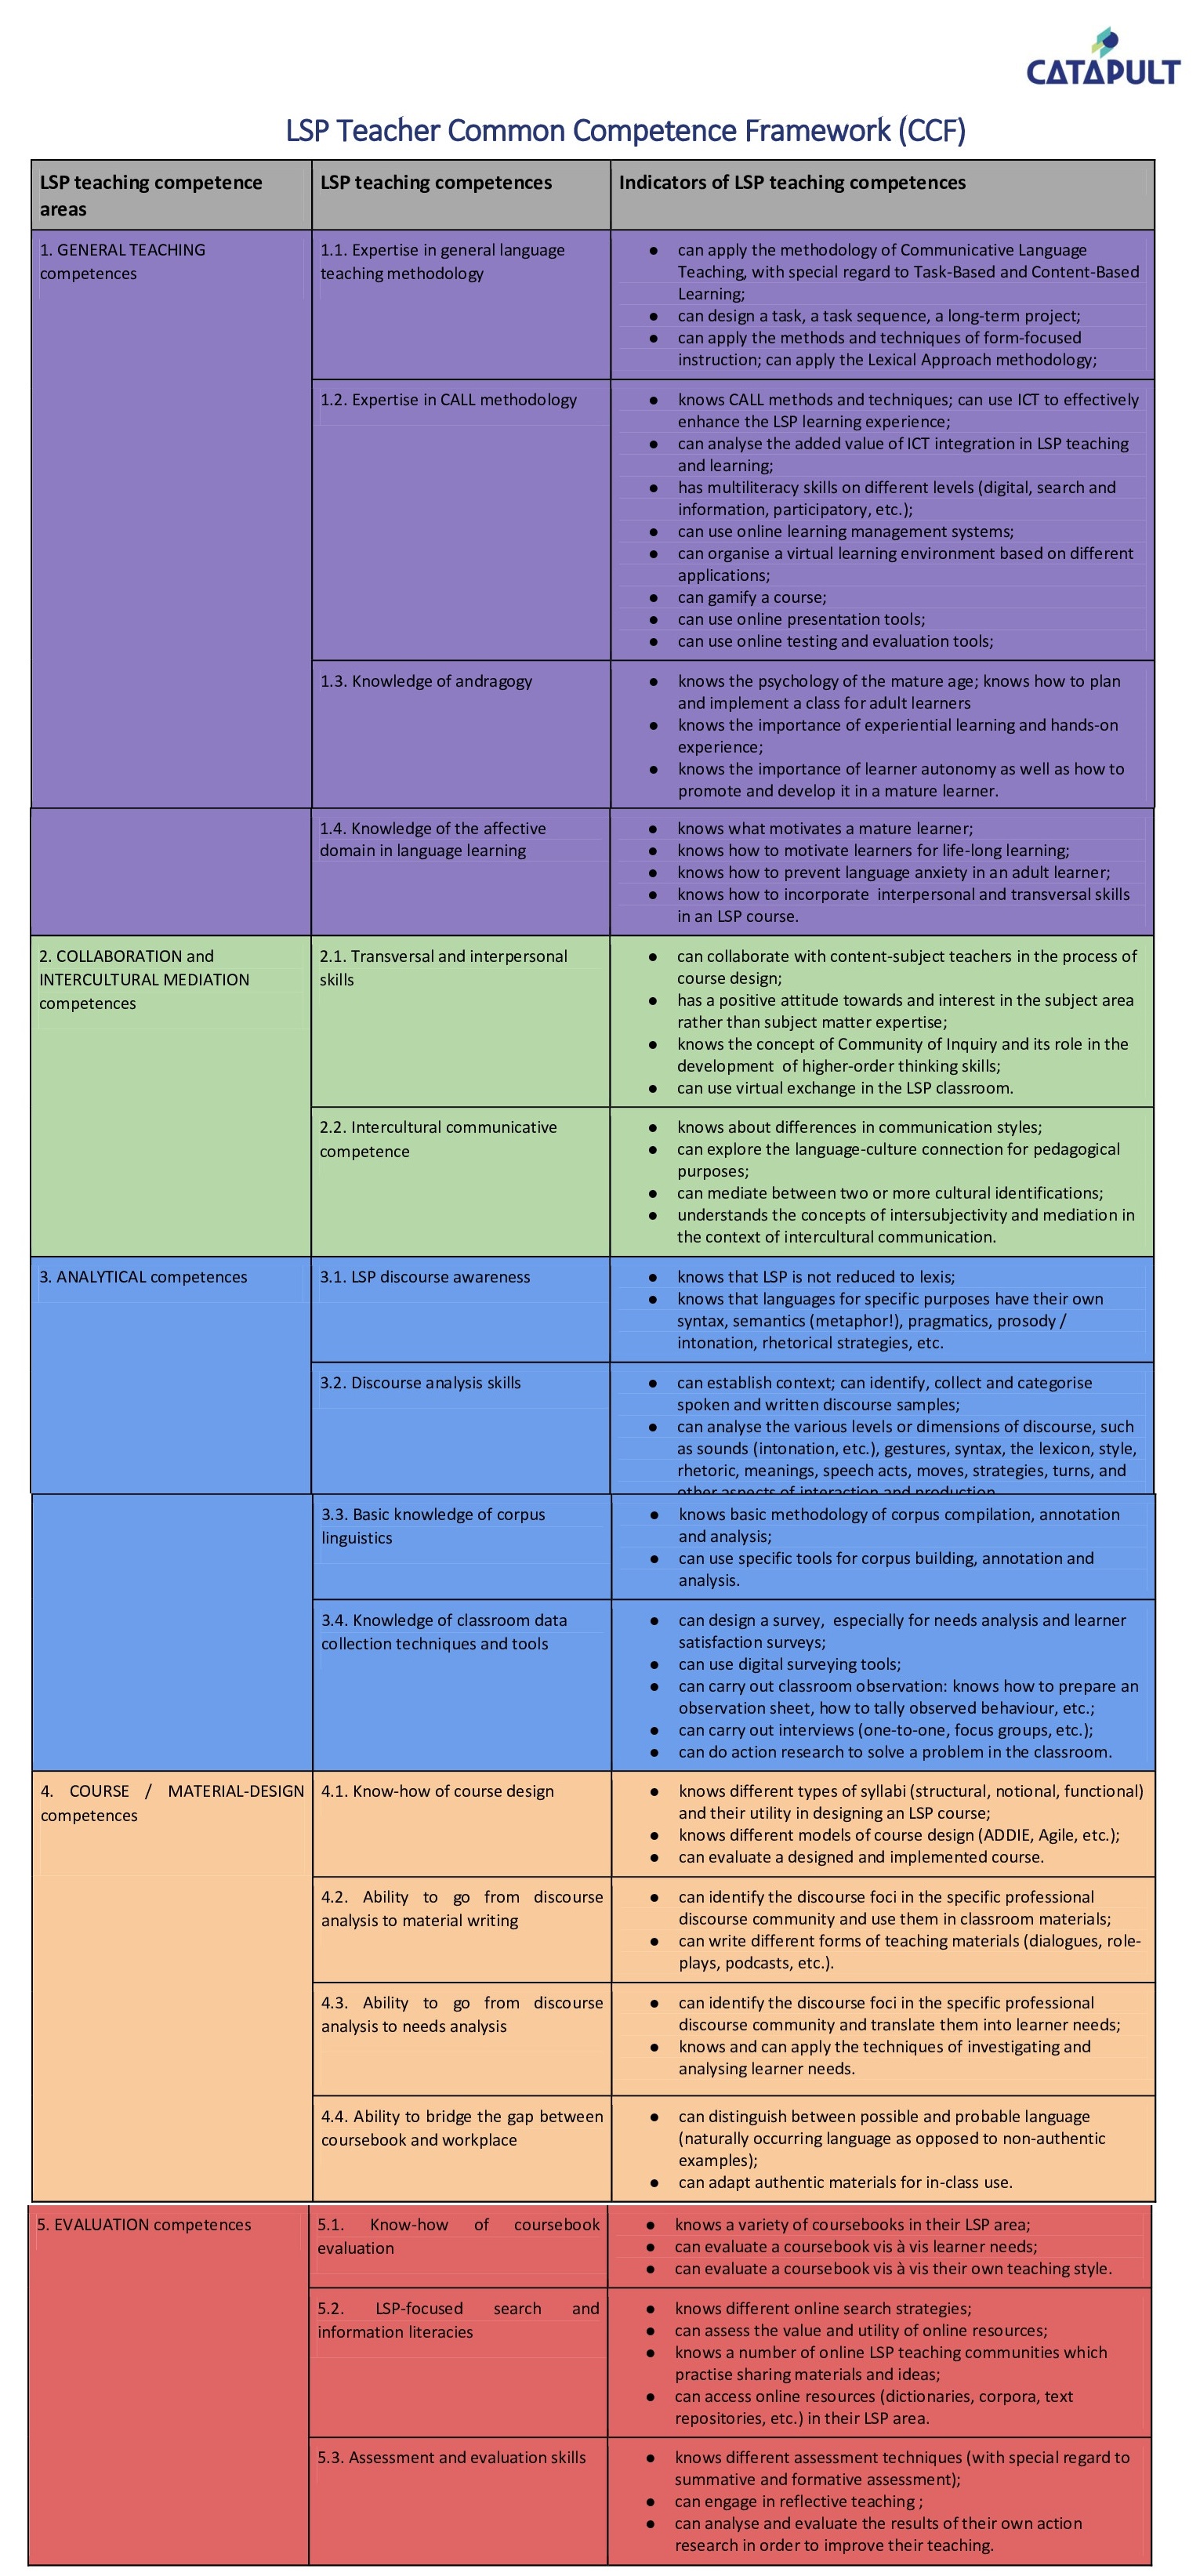 LSP Teacher Common Competence Framework